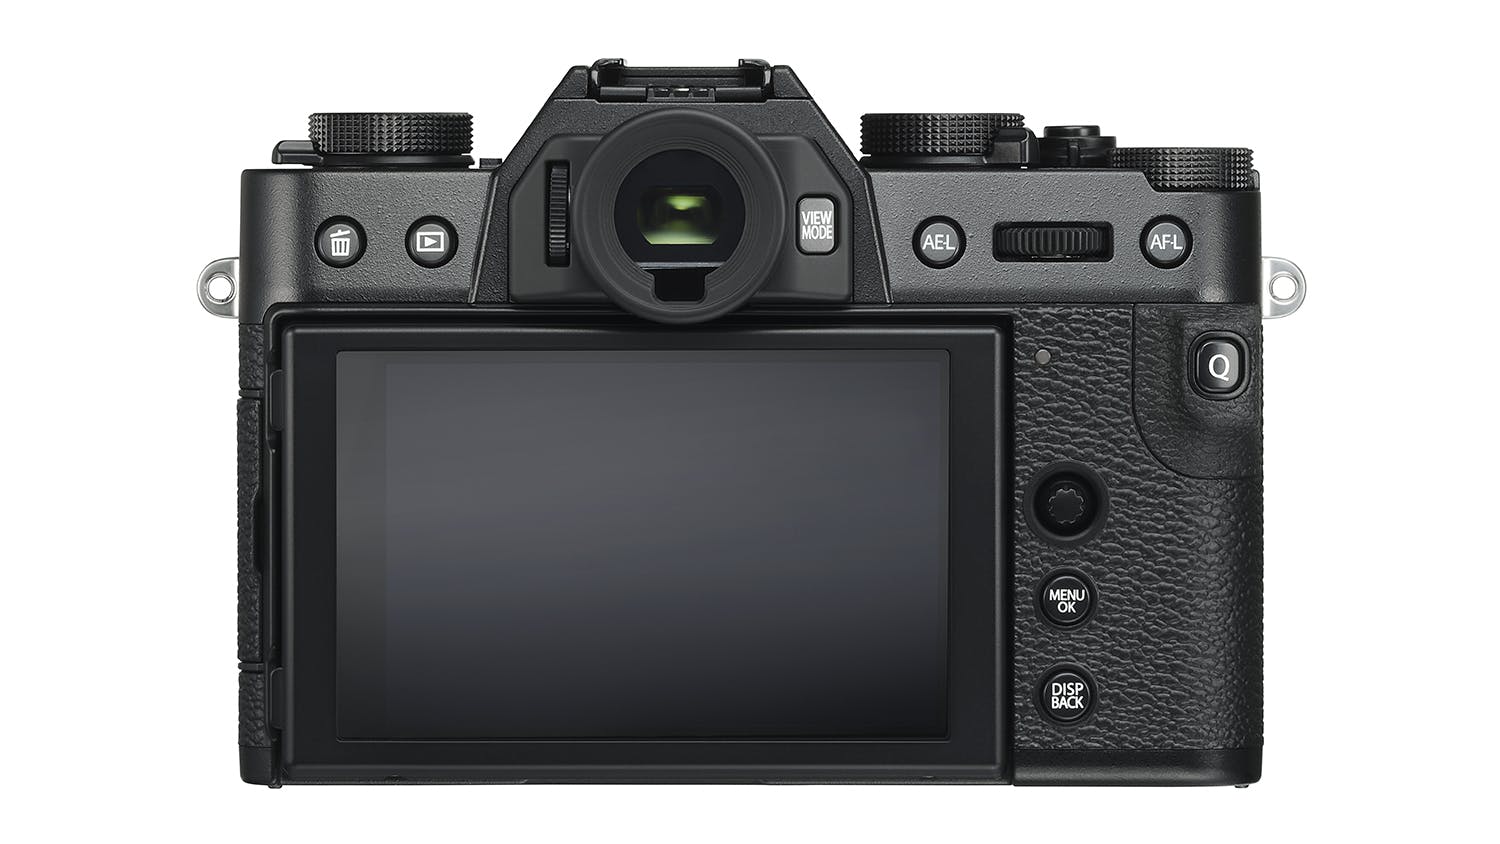 Fujifilm X-T30 Mirrorless Camera with 15-45mm Lens - Black